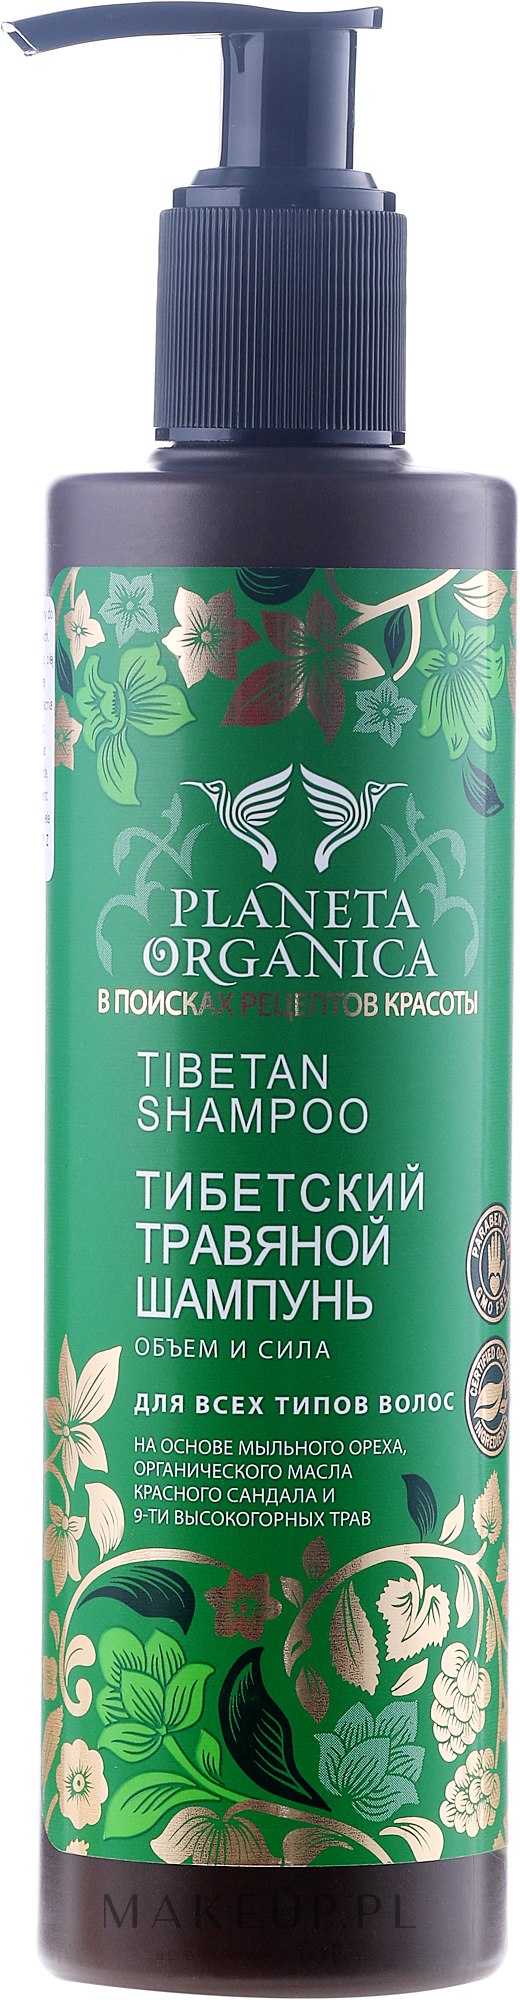 tybetanski szampon planeta organica opinie